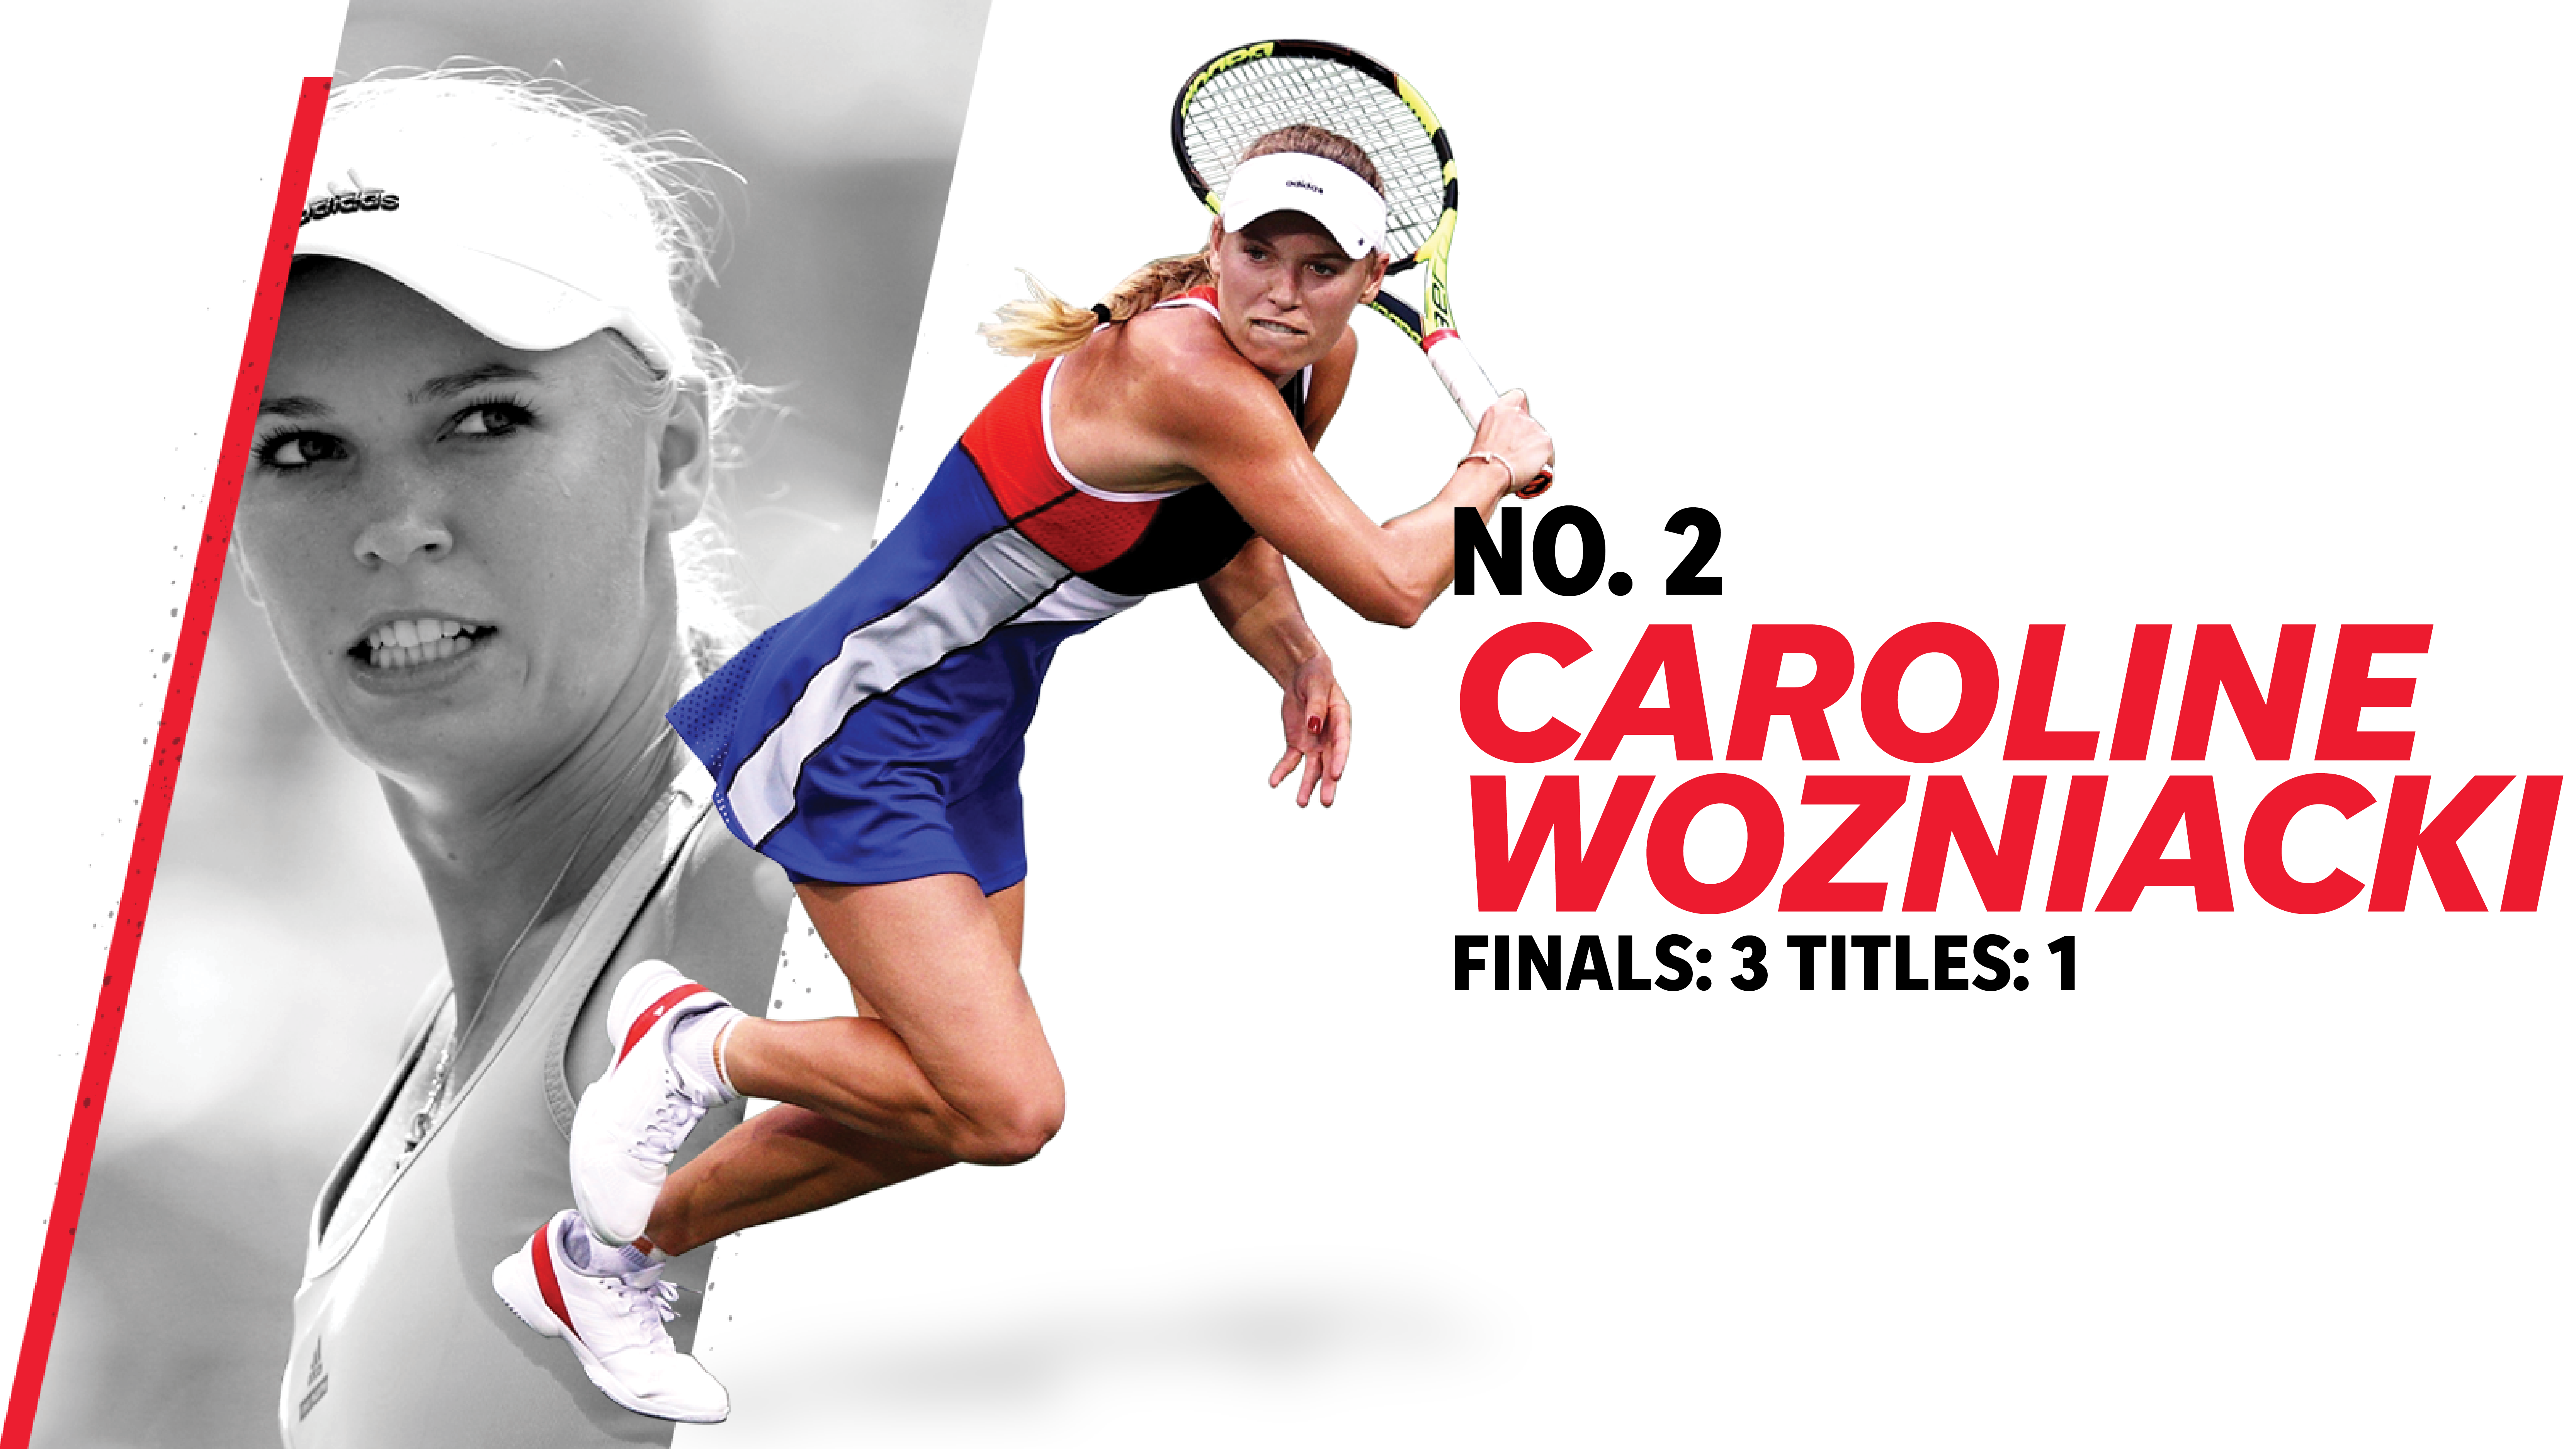 2. Caroline Wozniacki (finals: 3, titles: 1)